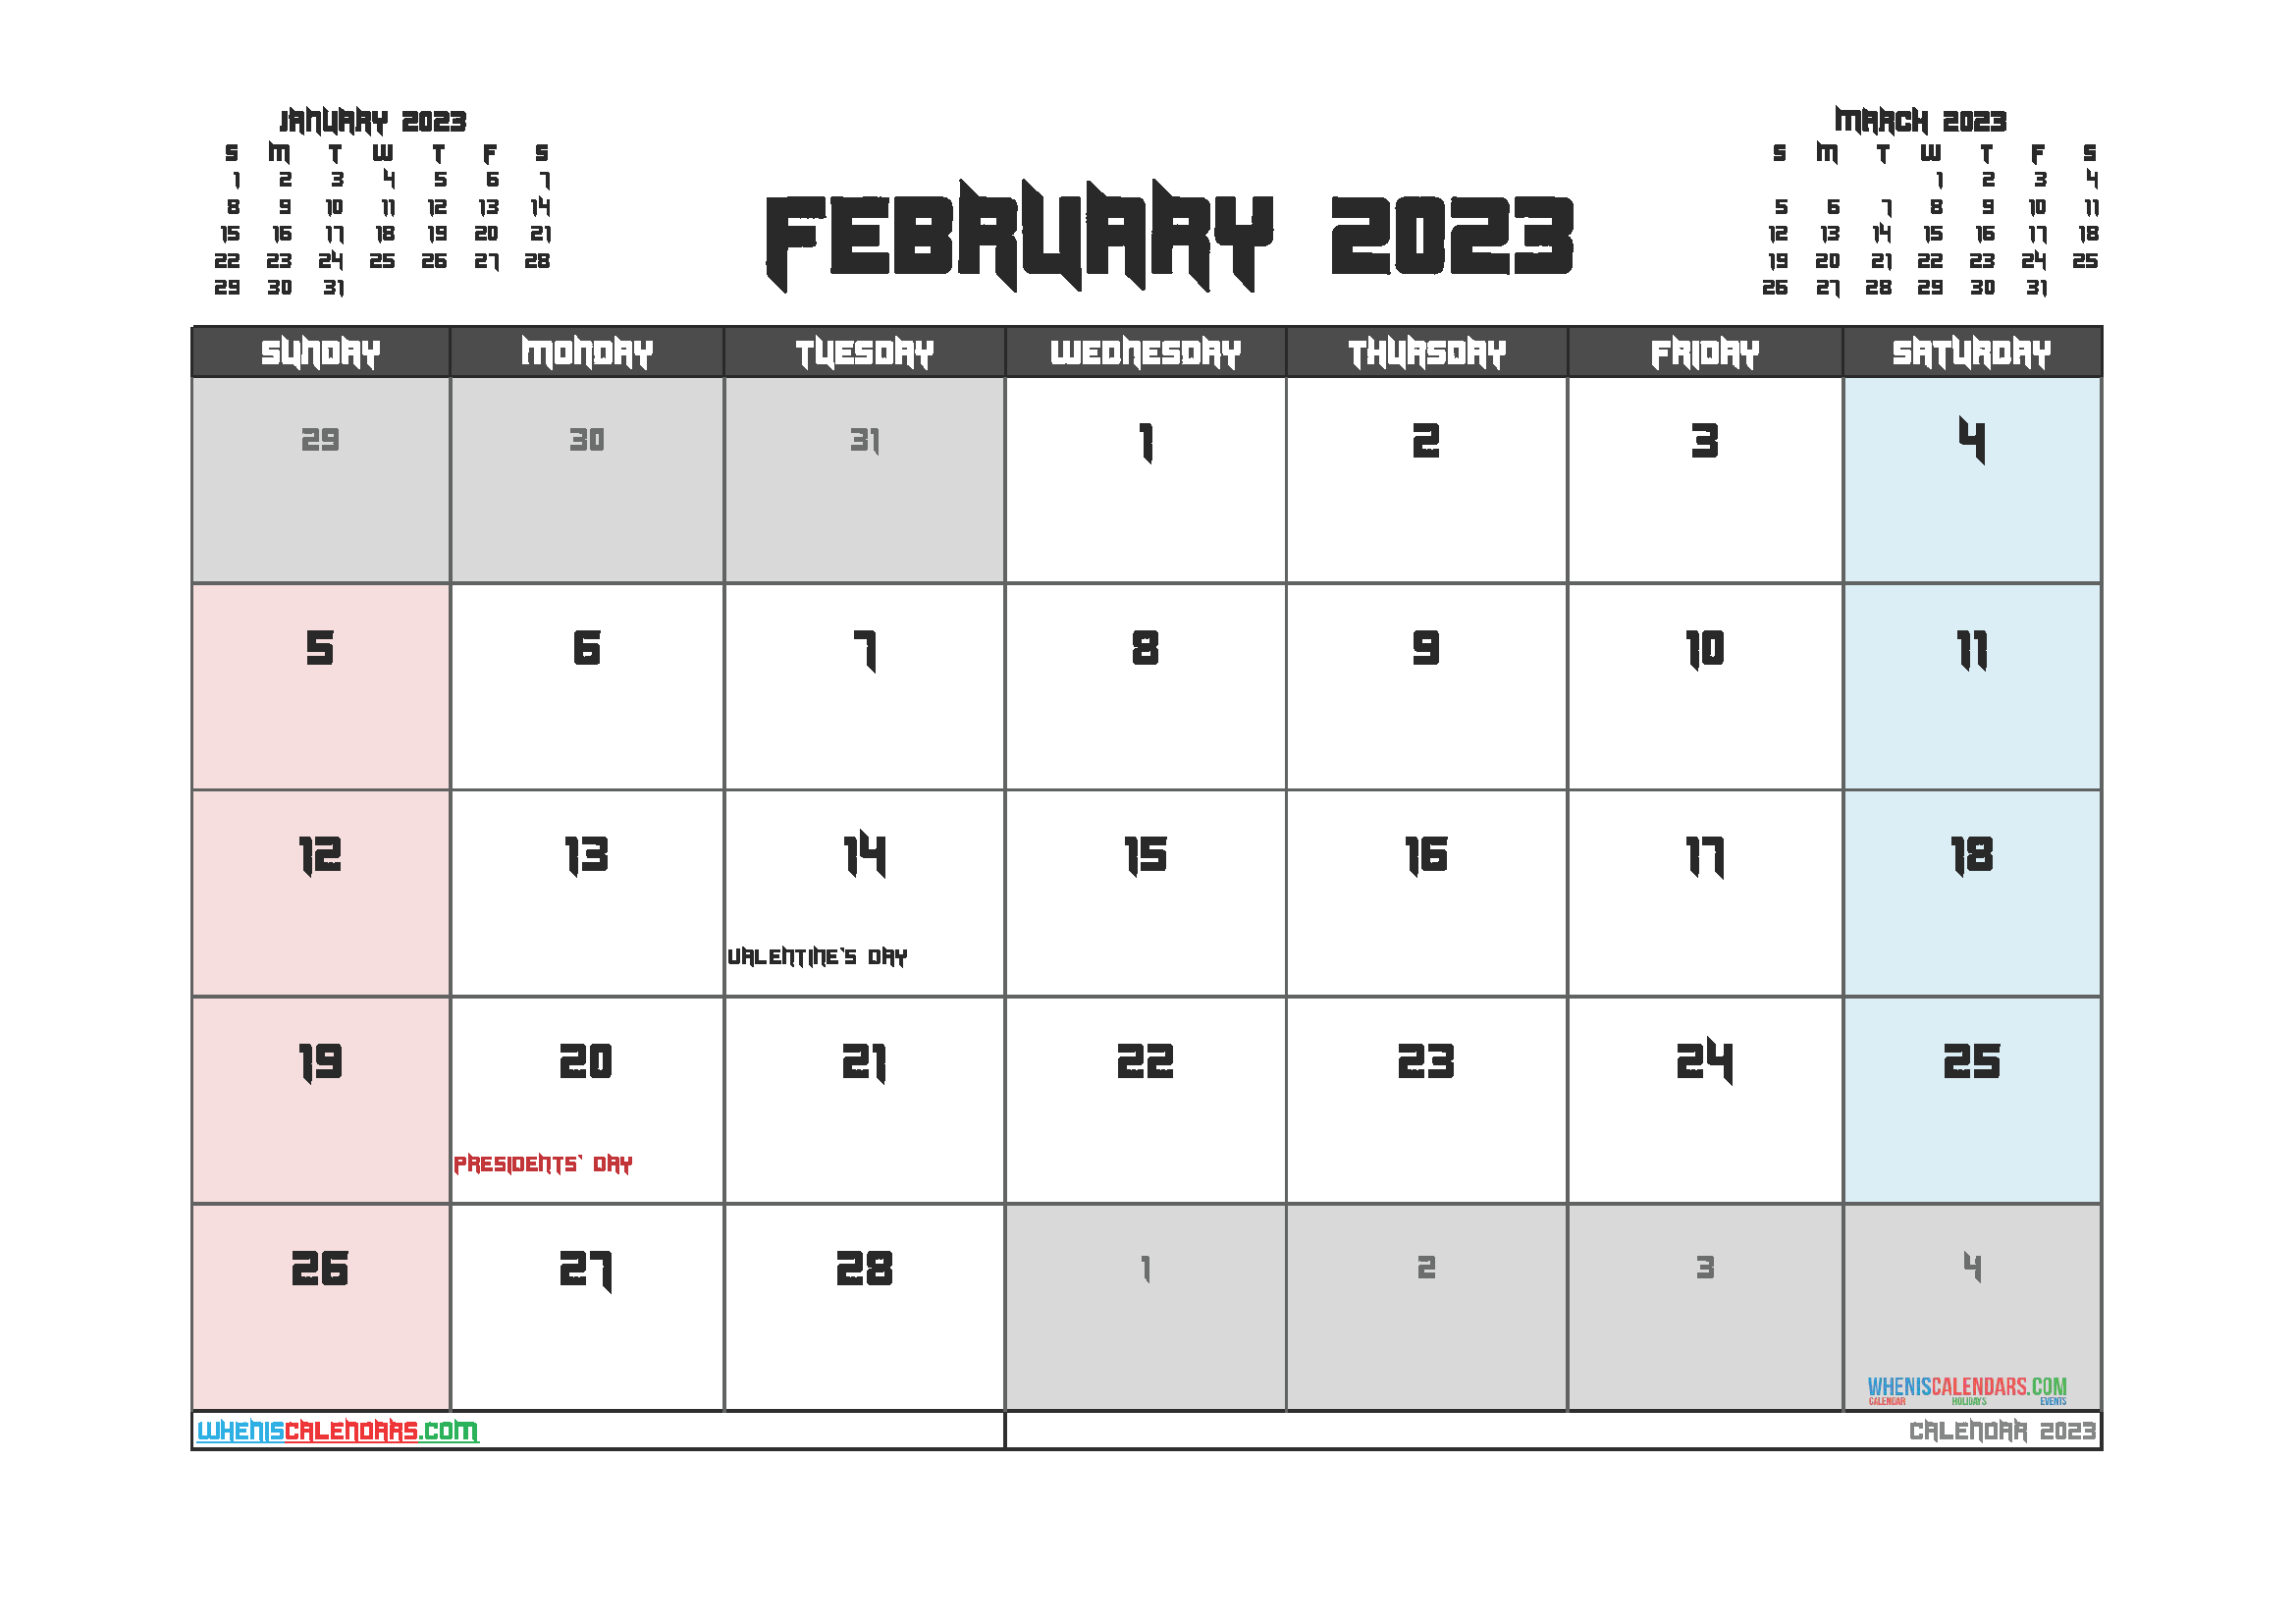 Printable Calendar February 2024 Cool Latest Famous January 2024